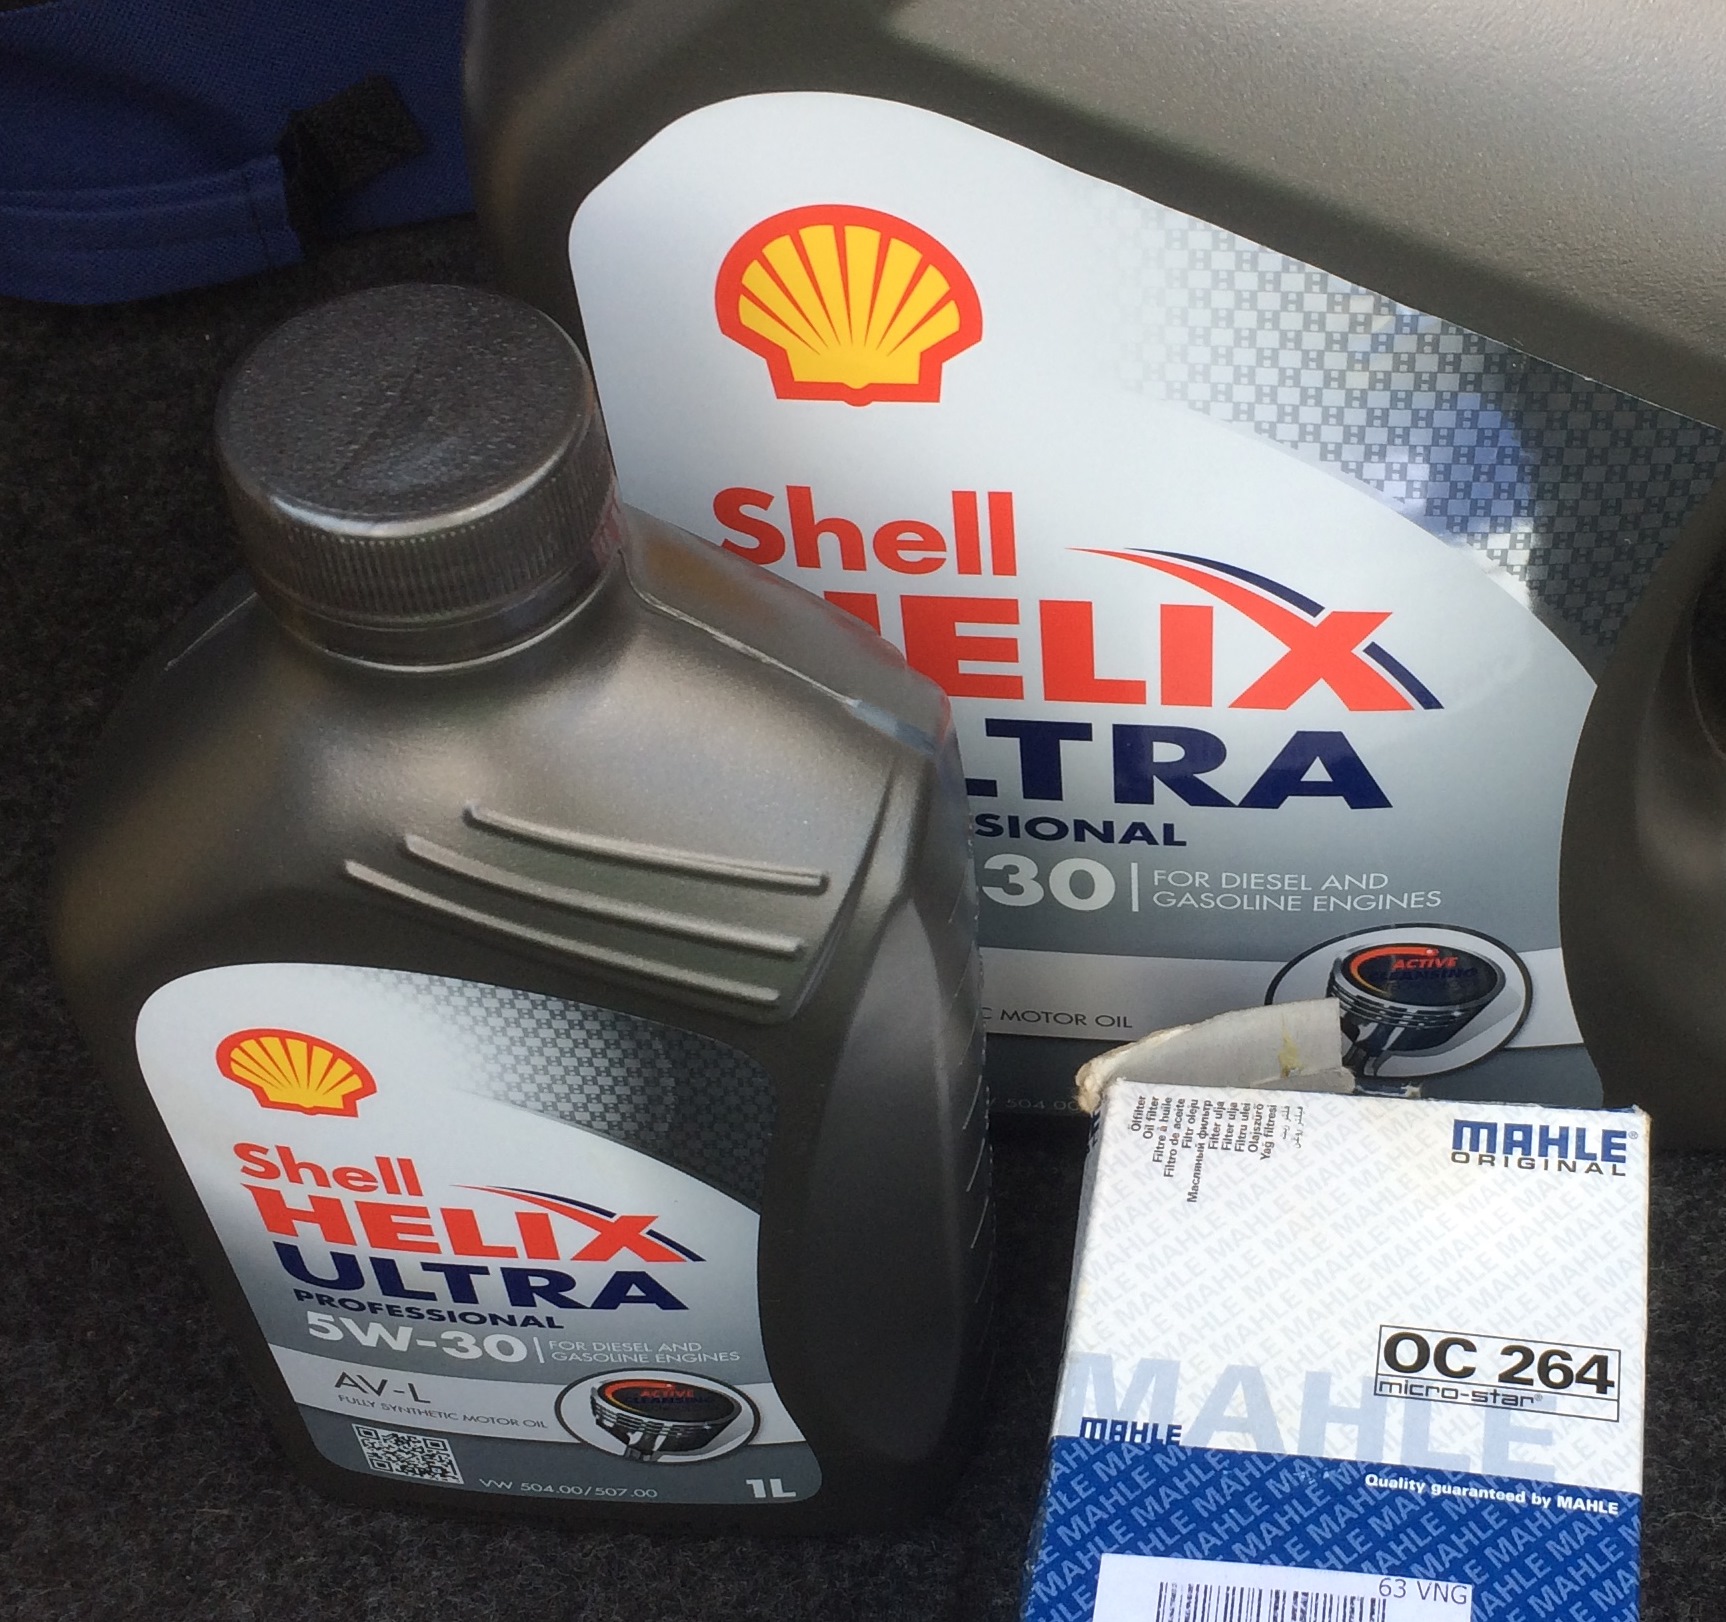 Shell av l. Vw504 масло Skoda Octavia Shell. Спецификация масла VW Shell. Масло Шелл на доливку 5 в 30 фото цены.